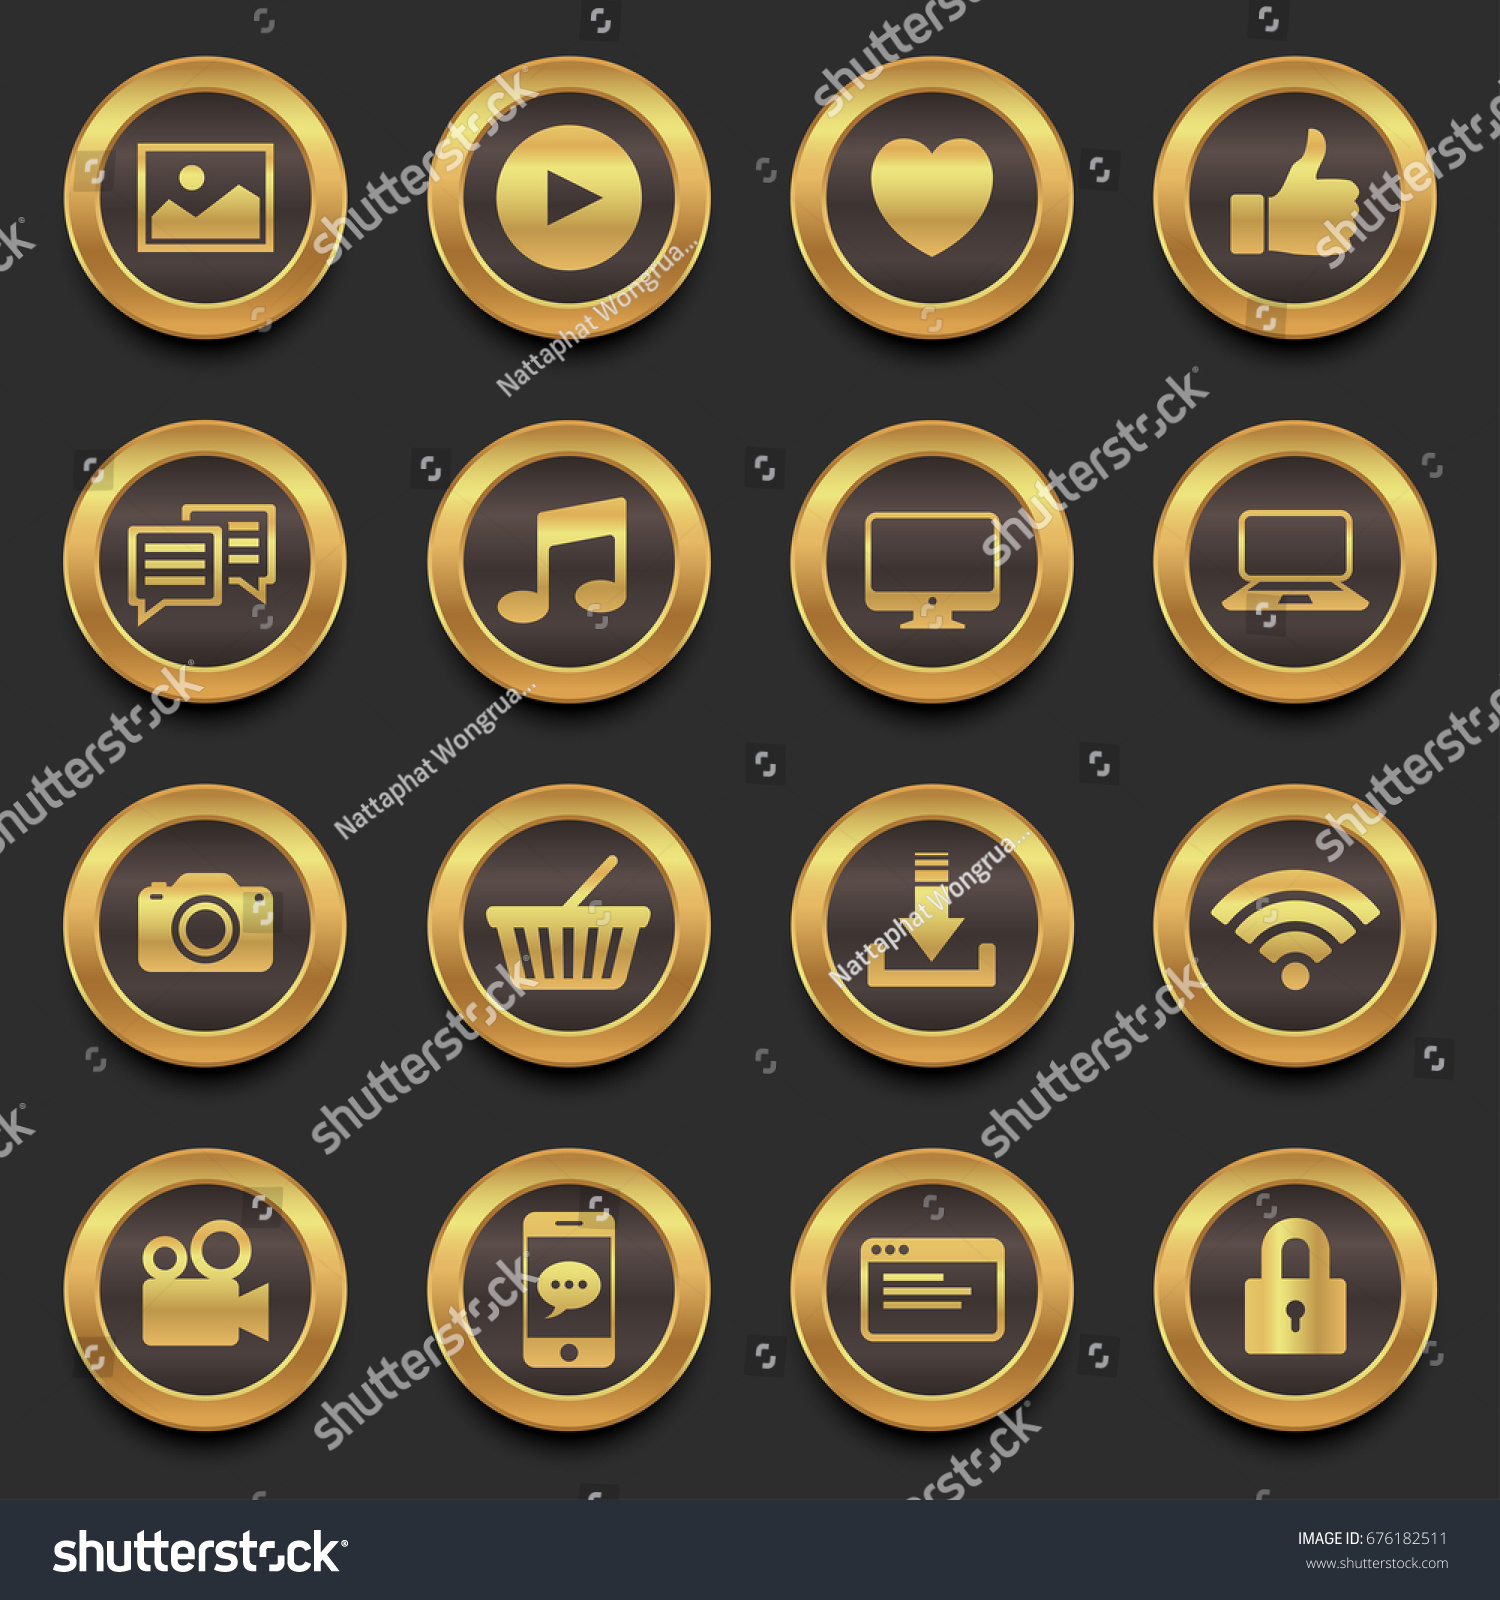 Gold Social Media Premium Icons Vector Stock Vector (Royalty Free ...